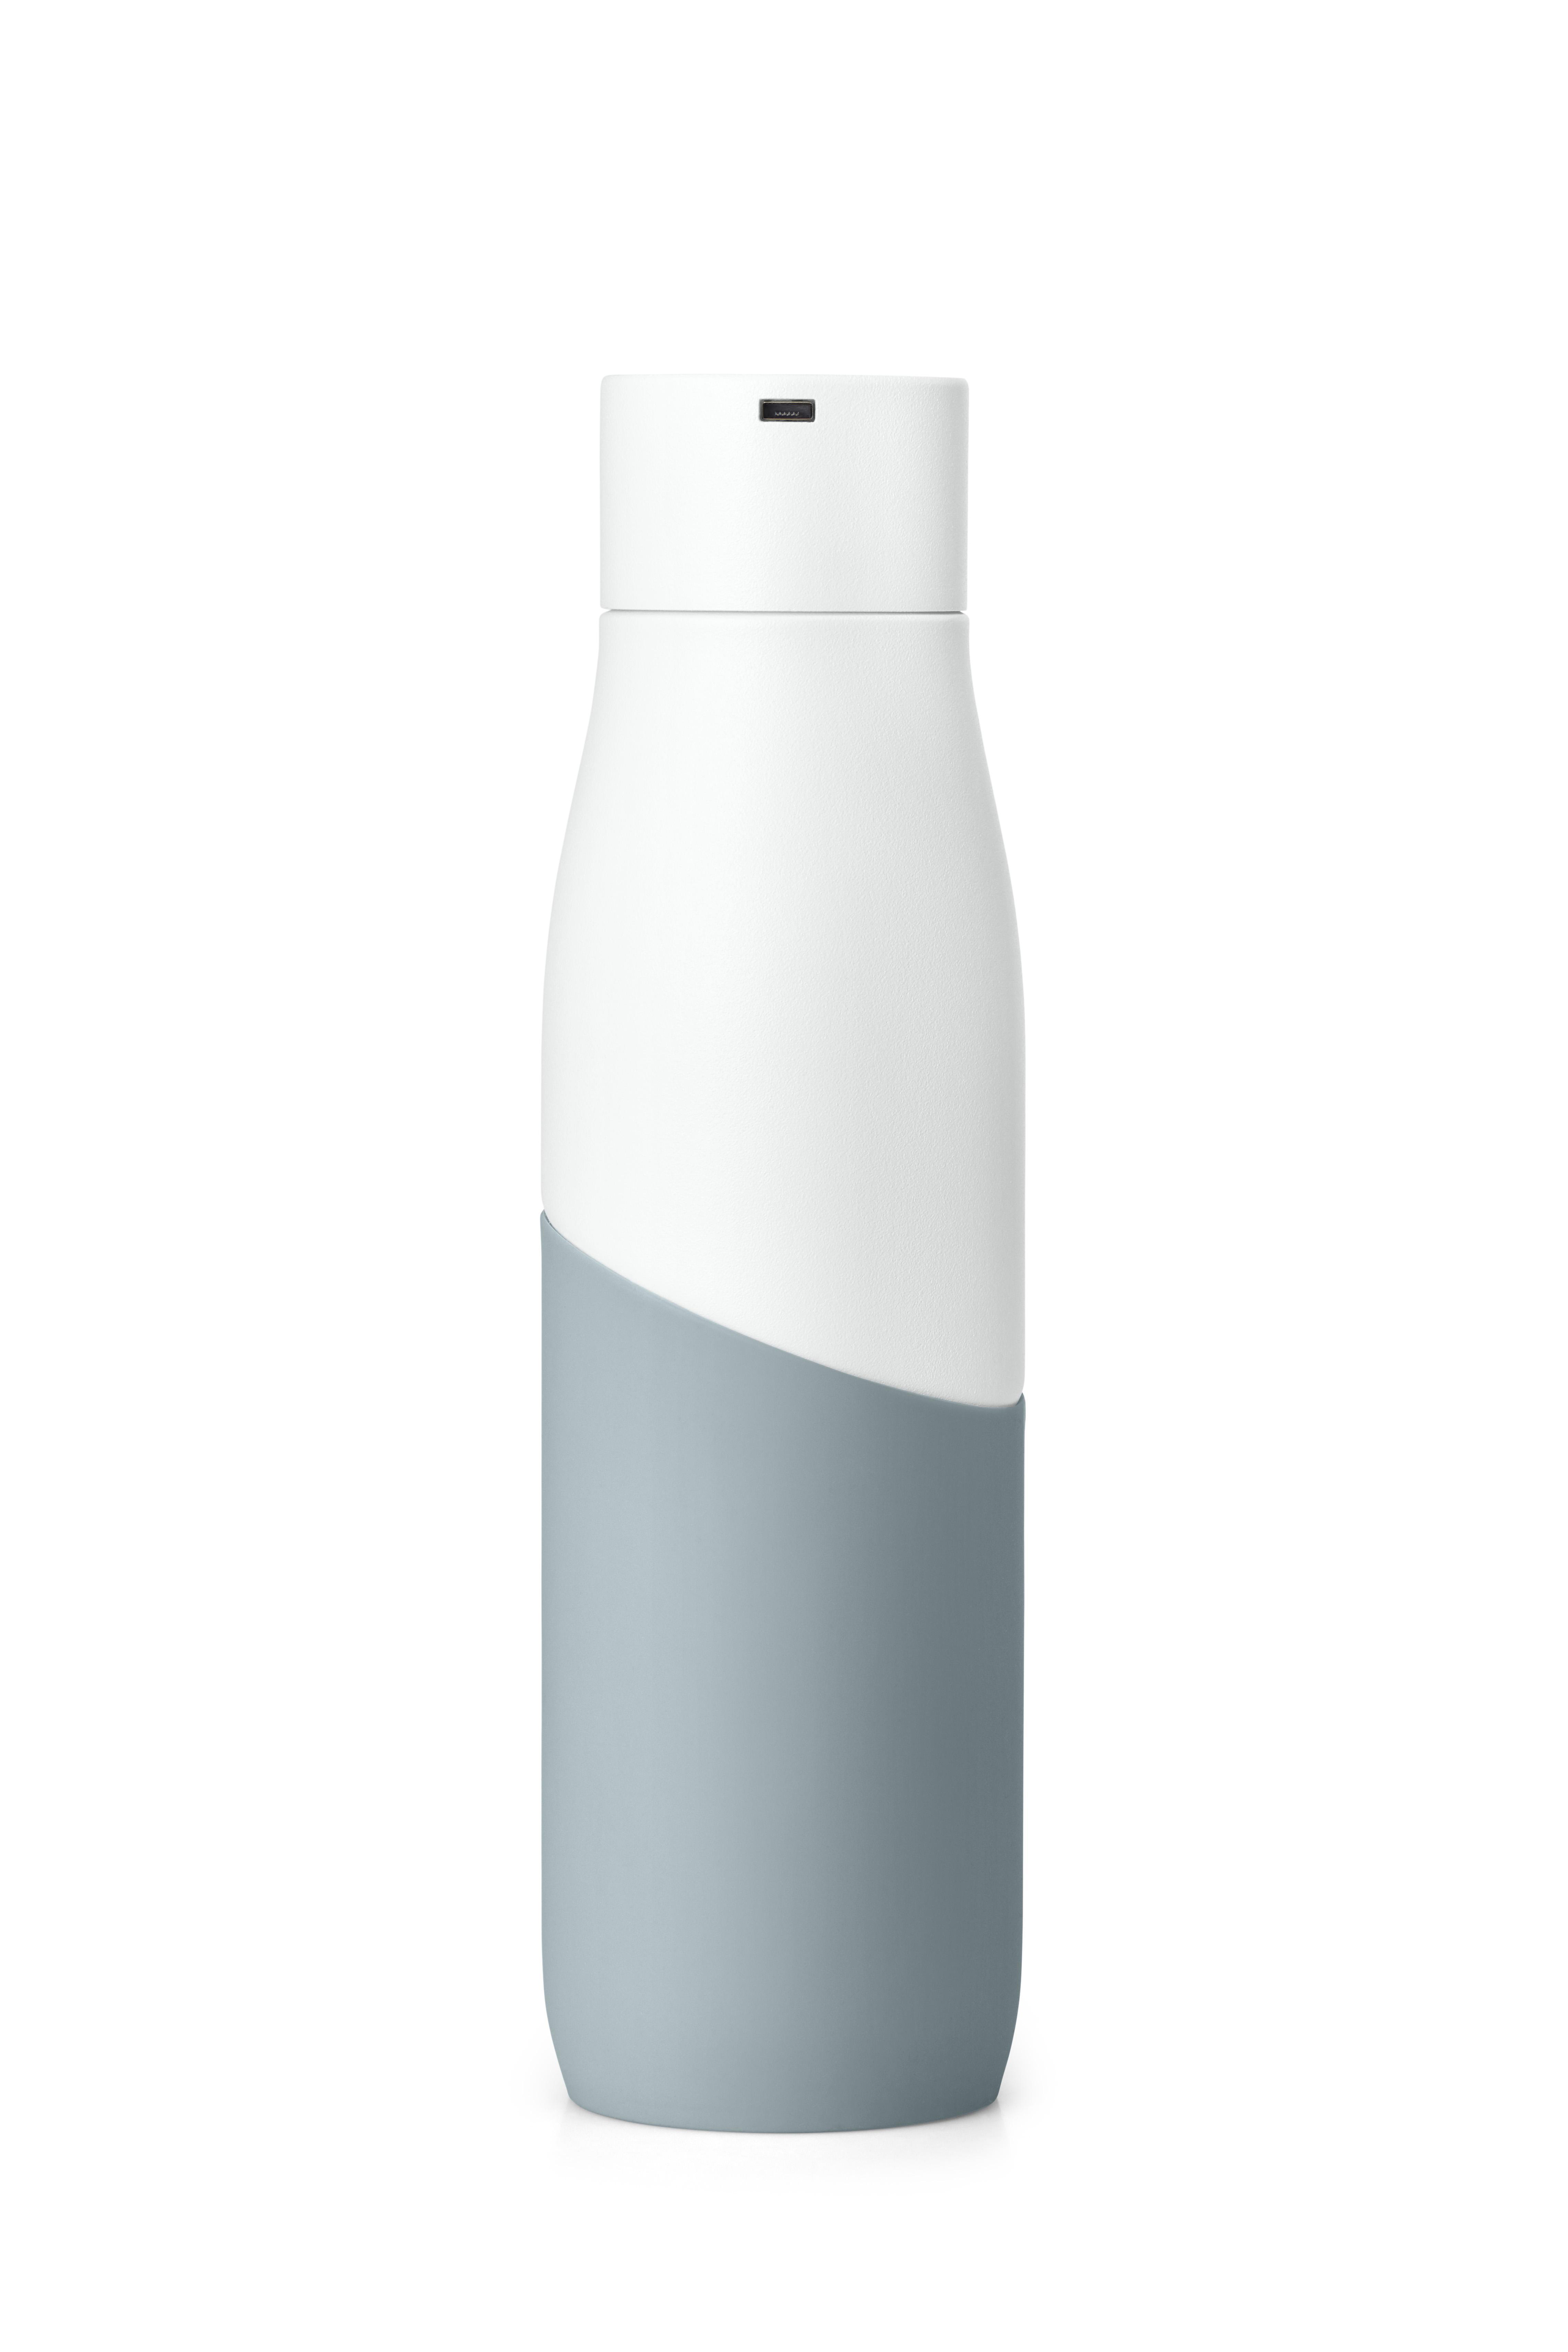 LARQ BSWP071A Bottle edition Terra Trinkflasche Movement white/Pebble